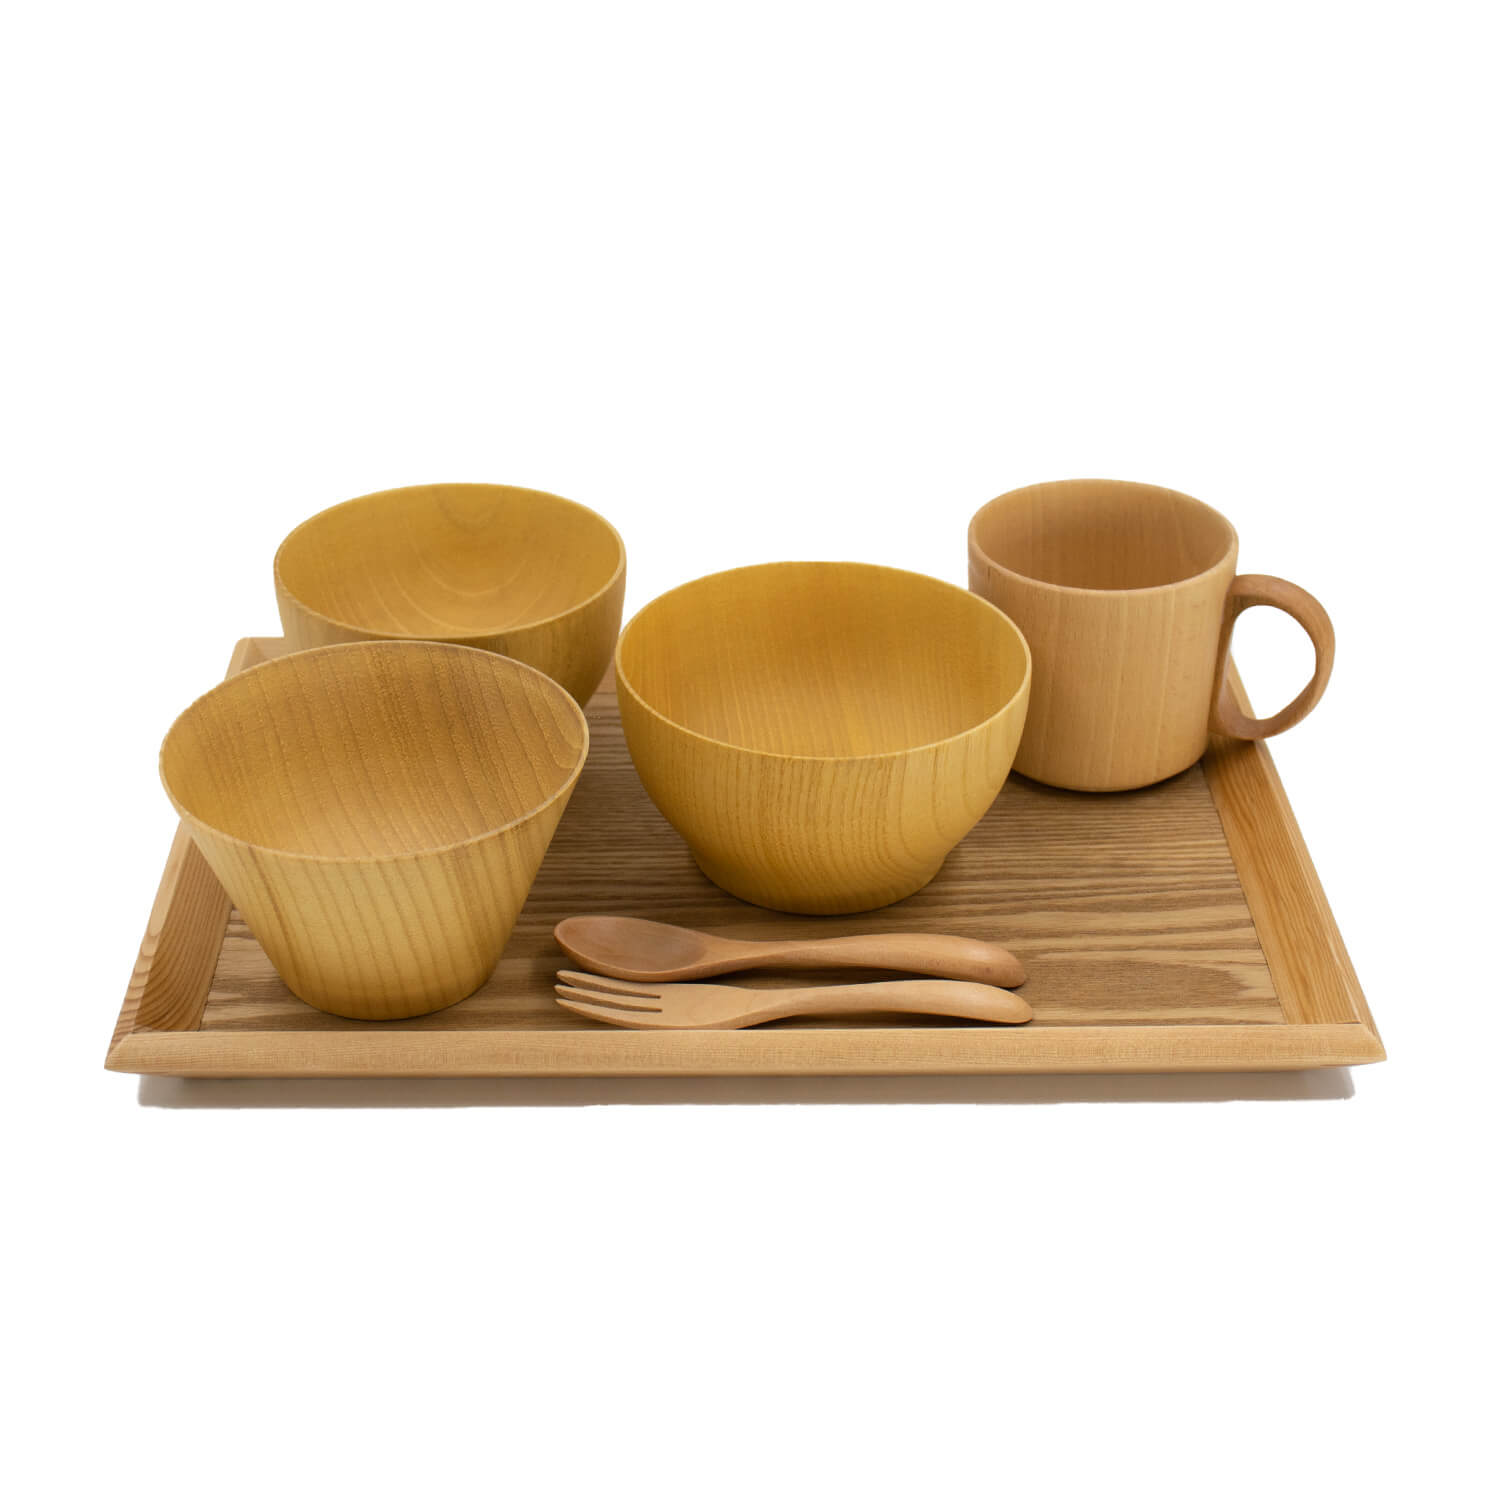 Natural wood baby tableware set